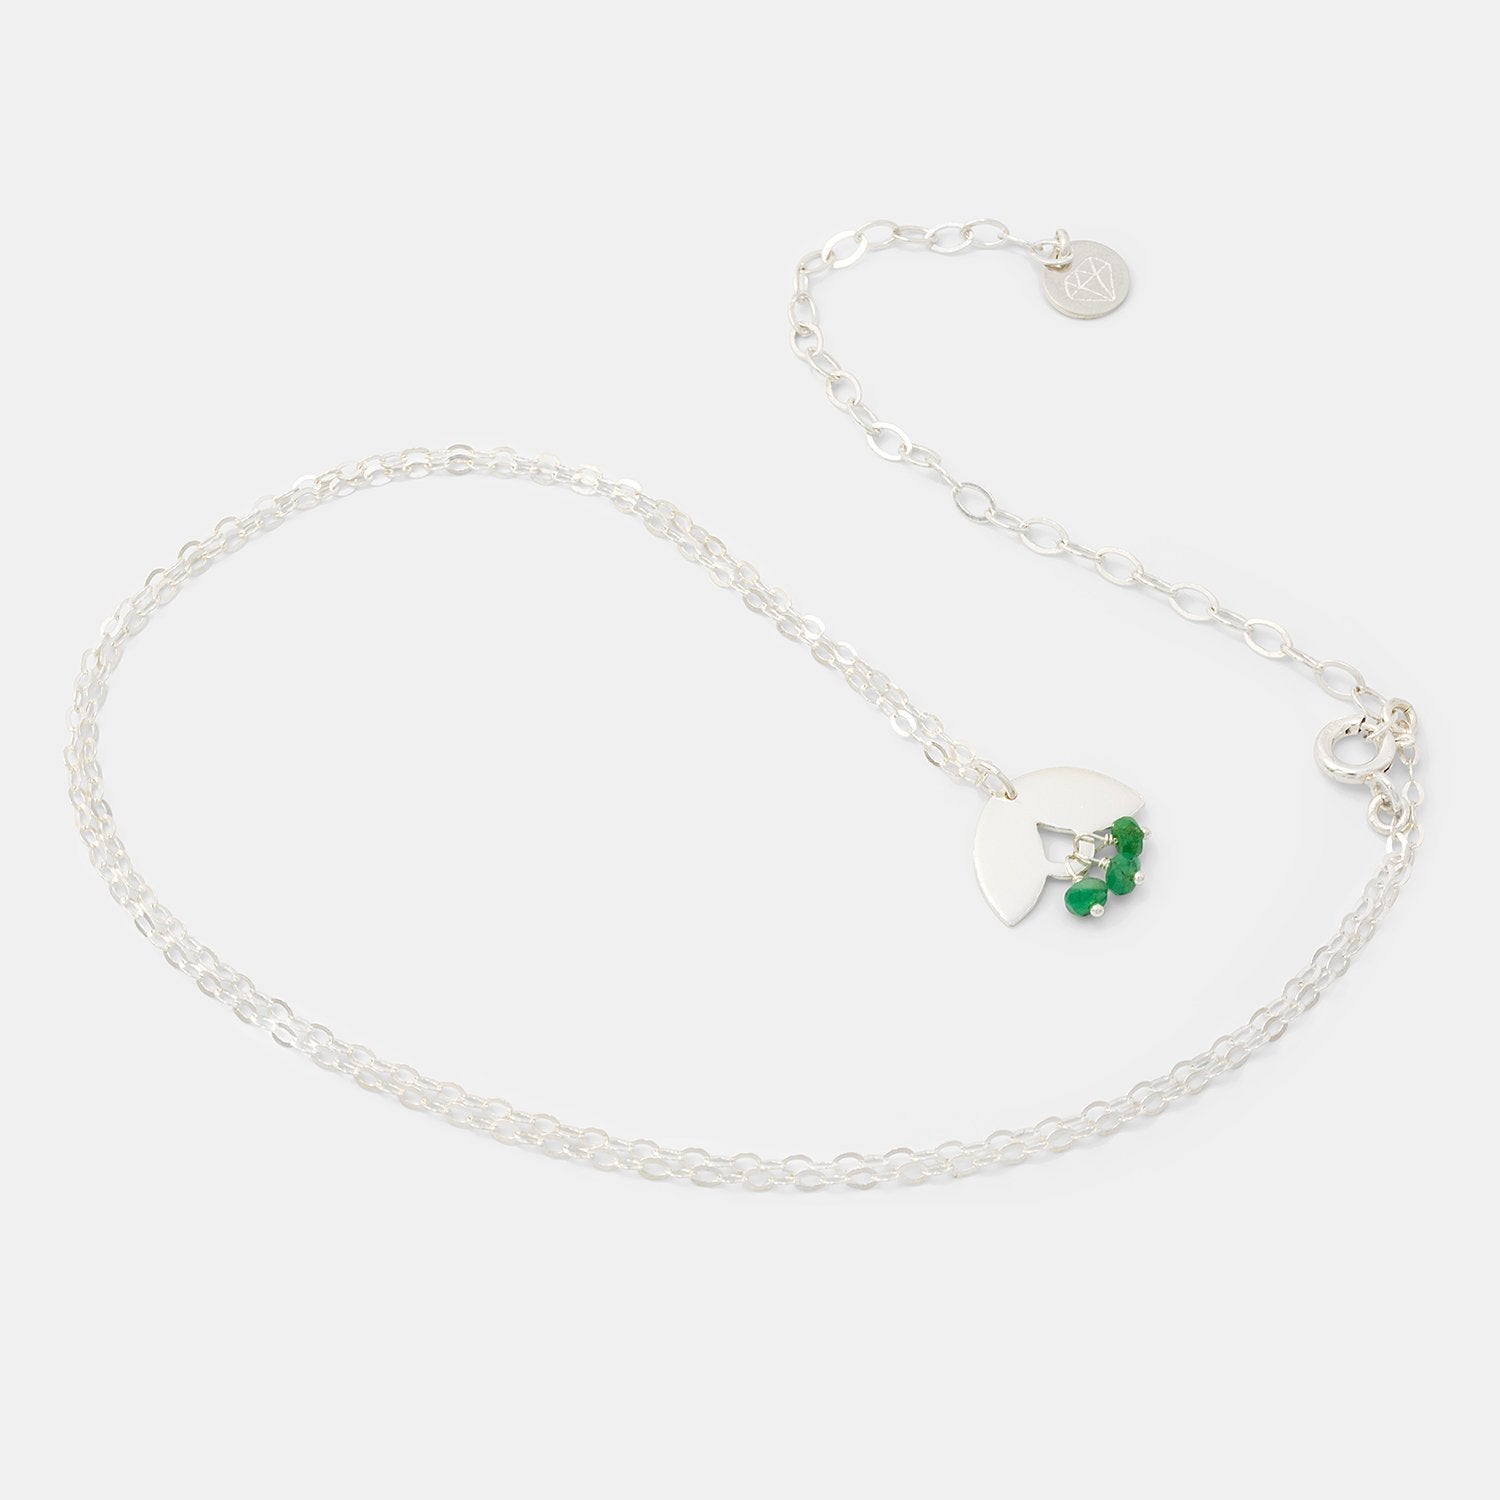 Leaves & emeralds necklace - Simone Walsh Jewellery Australia